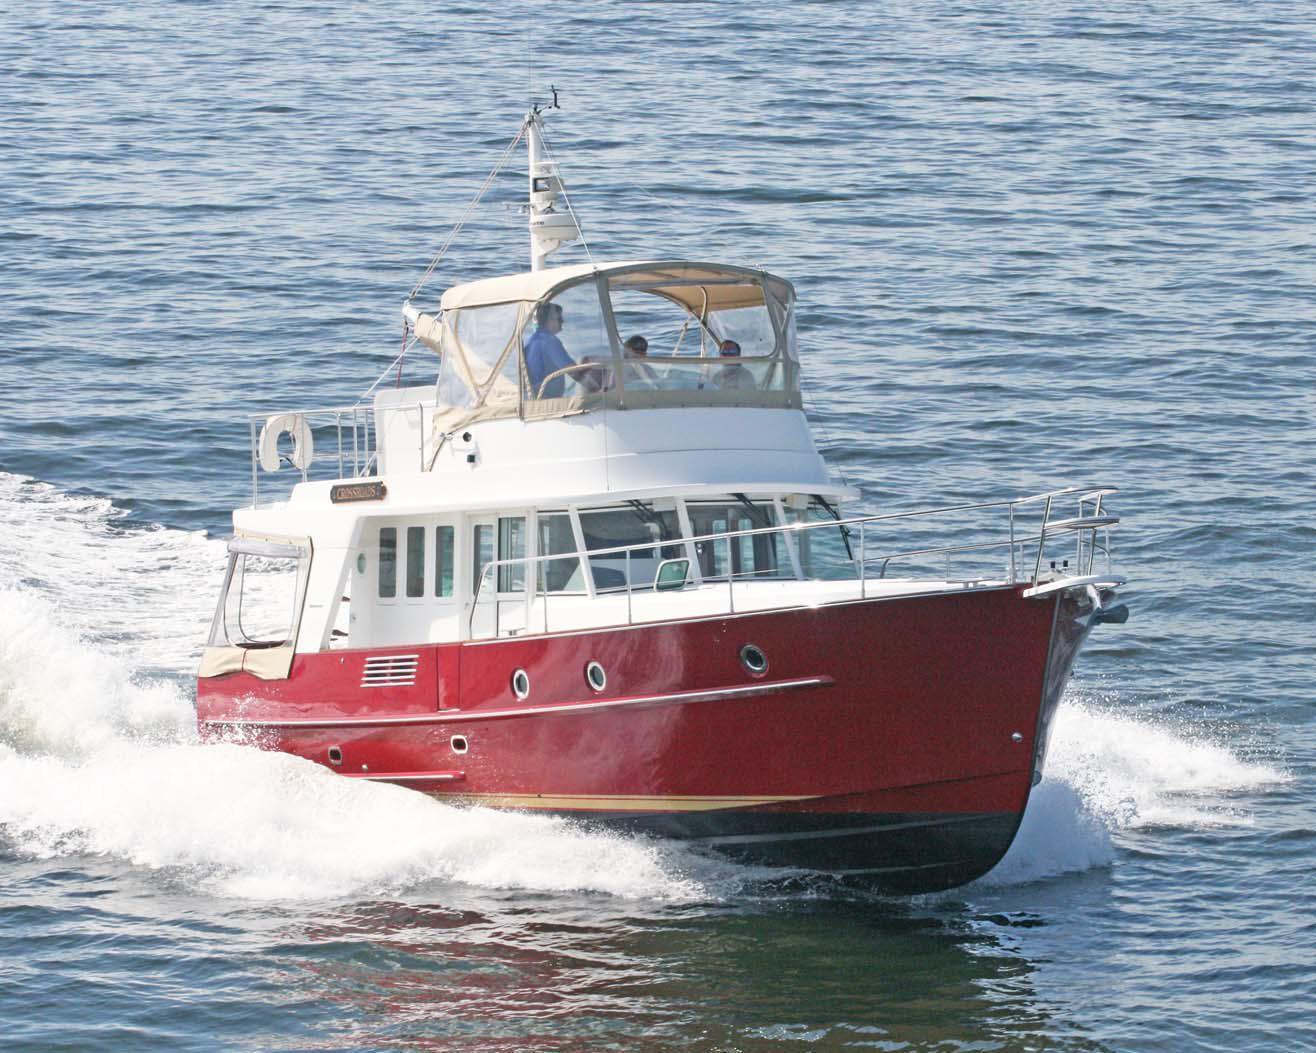 Beneteau Swift Trawler 42, Annapolis